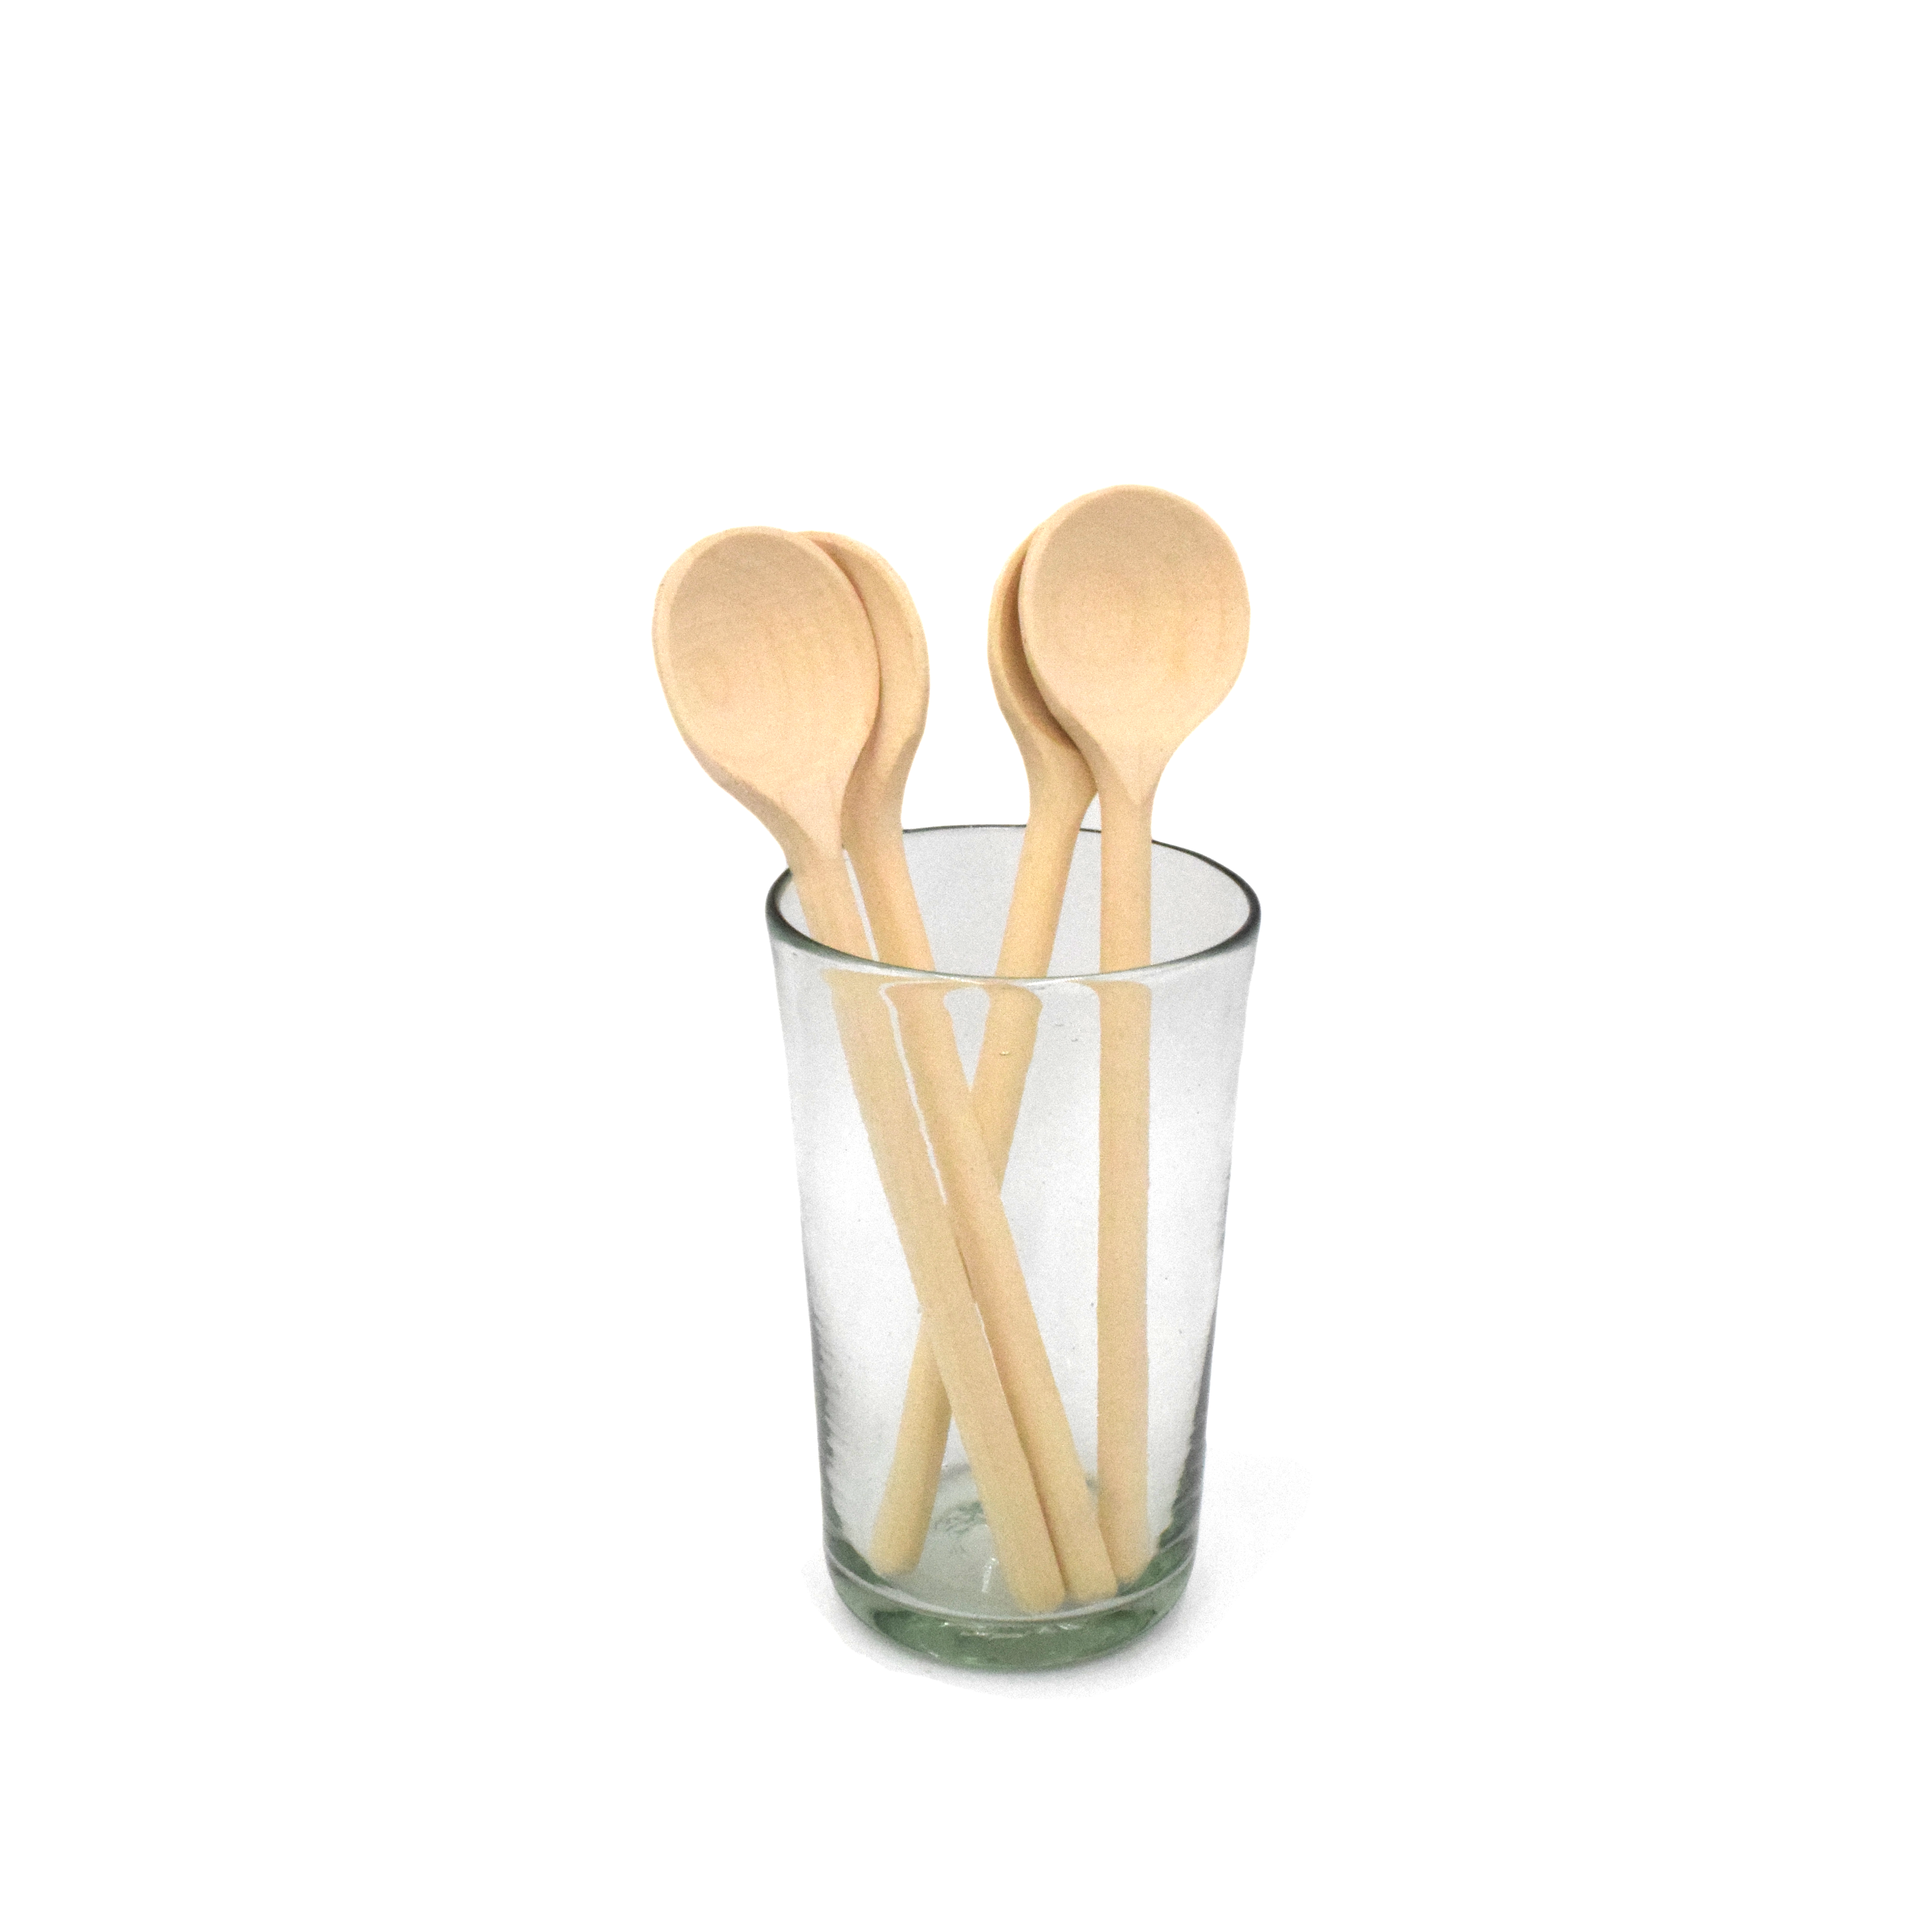 Spoon maple porridge/tasting